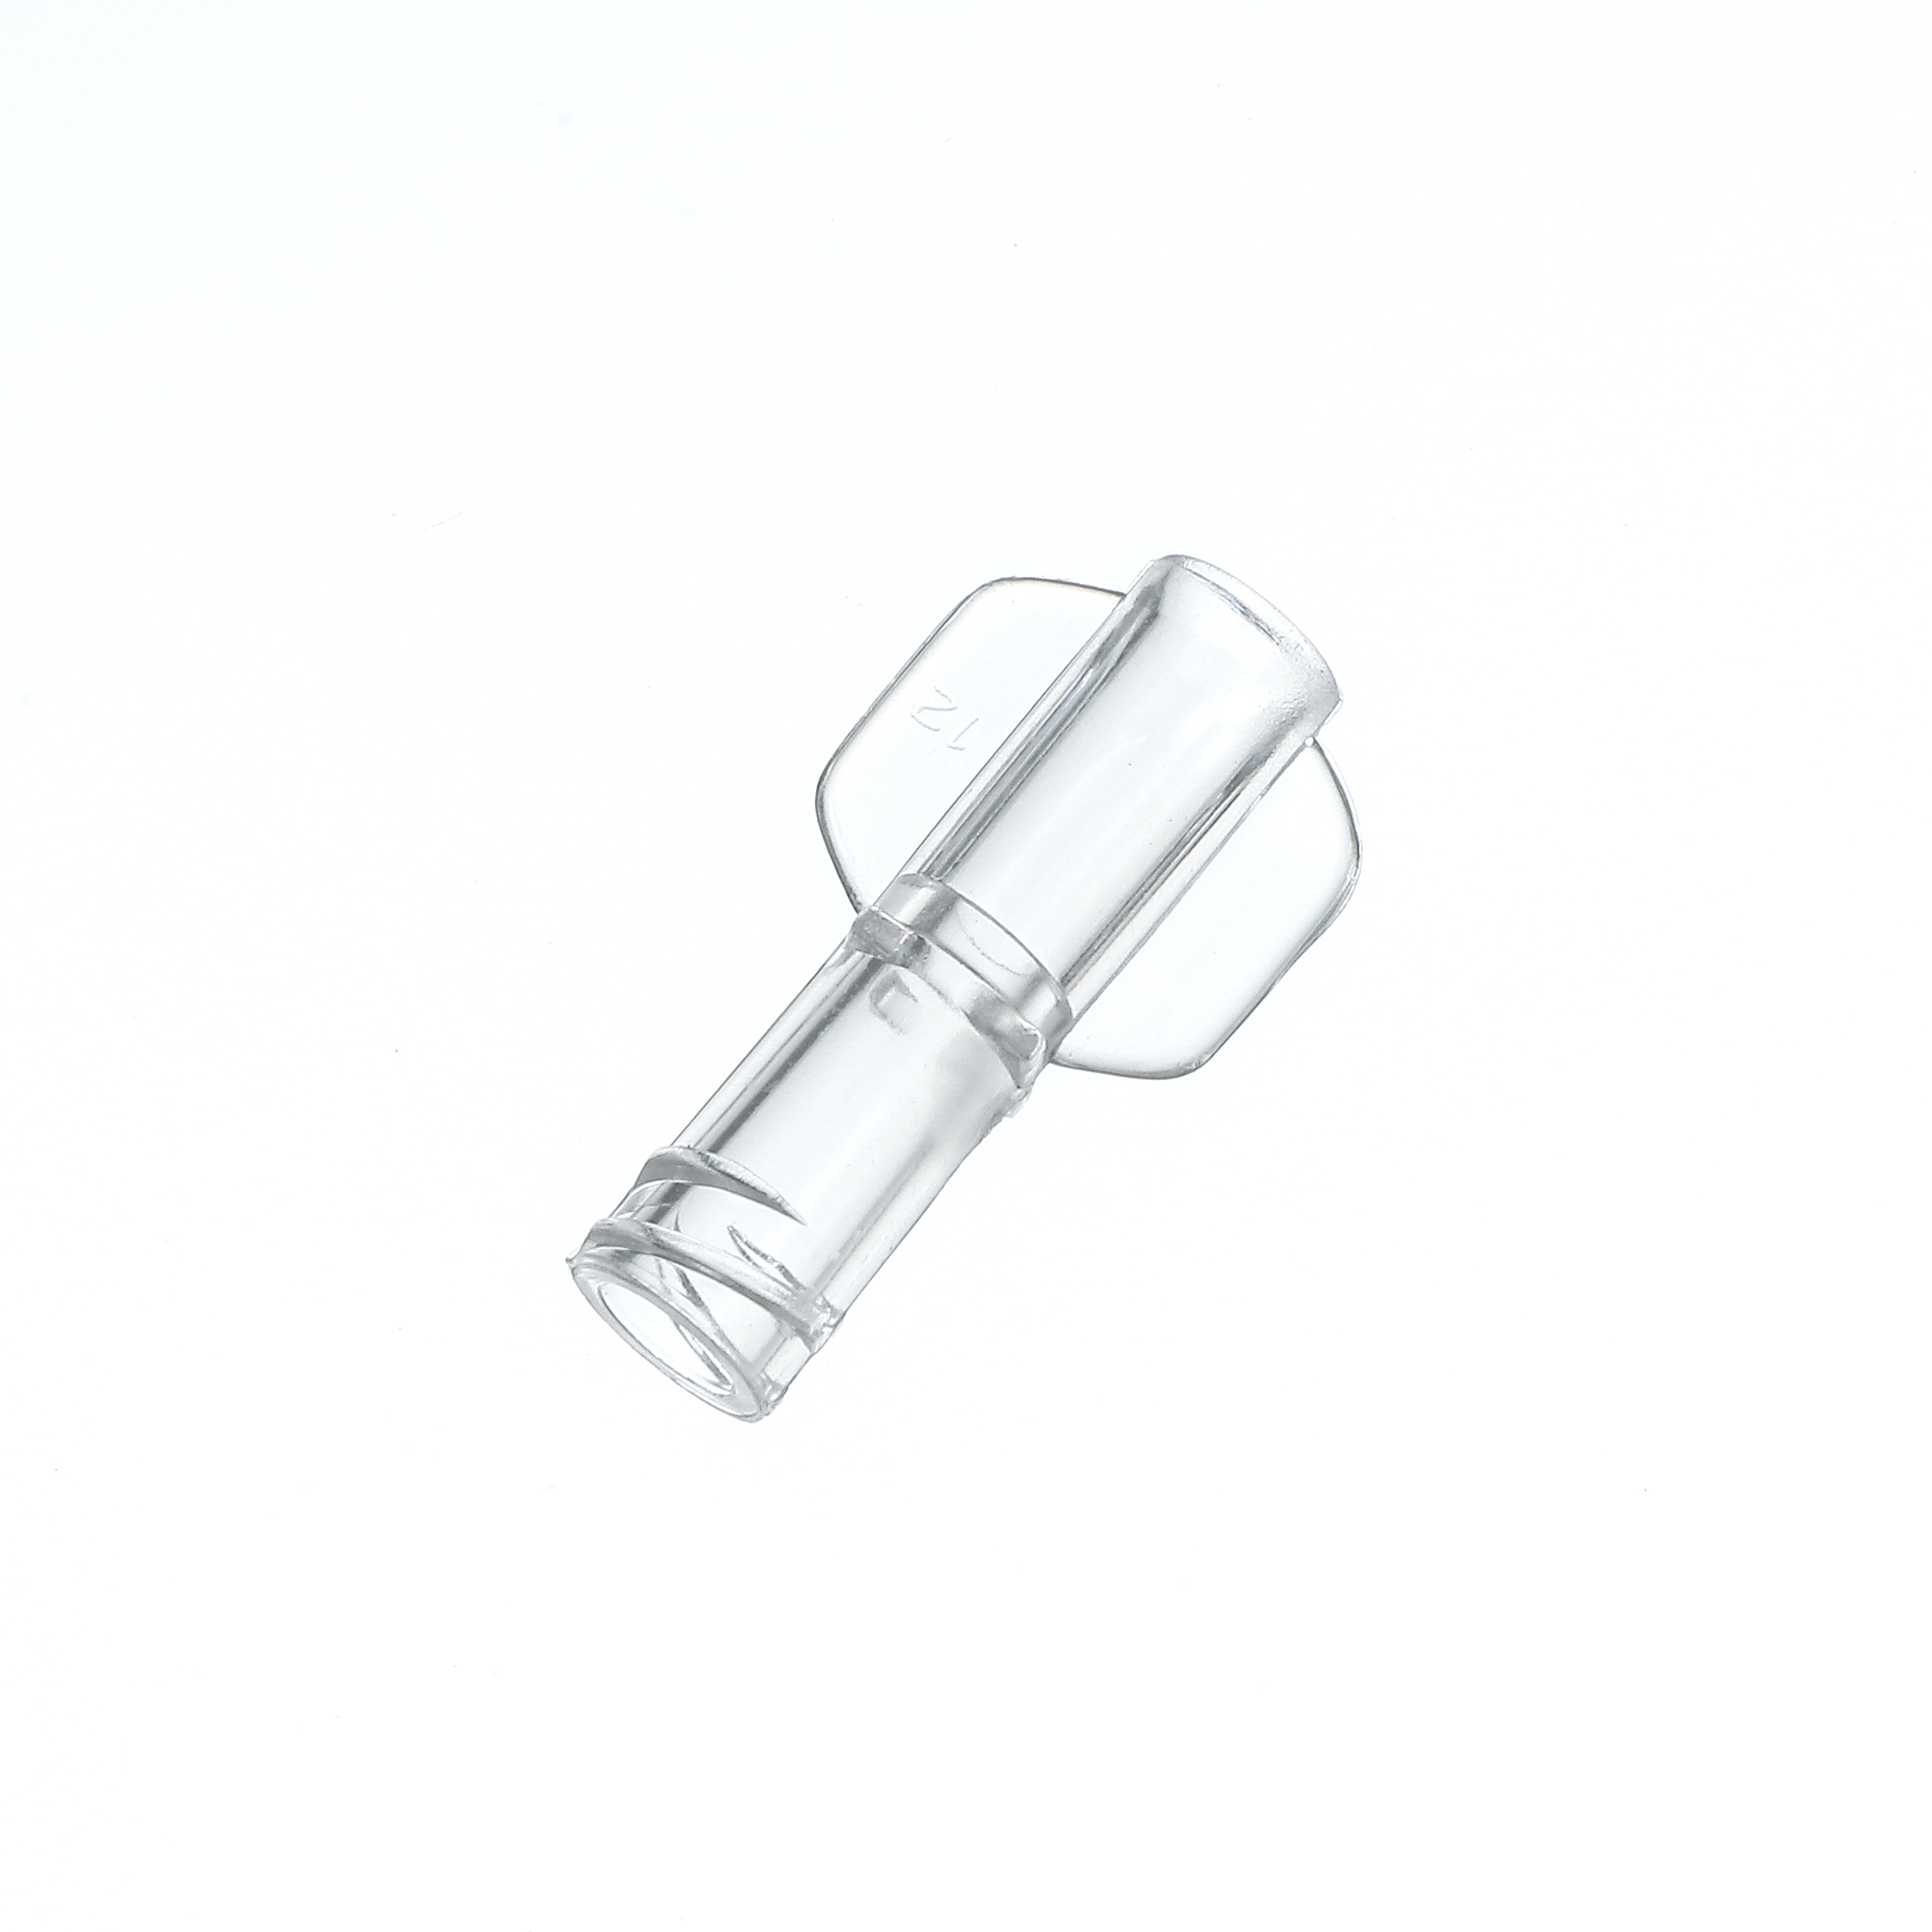 Female Luer Lock Connectors – BQ+ medical device